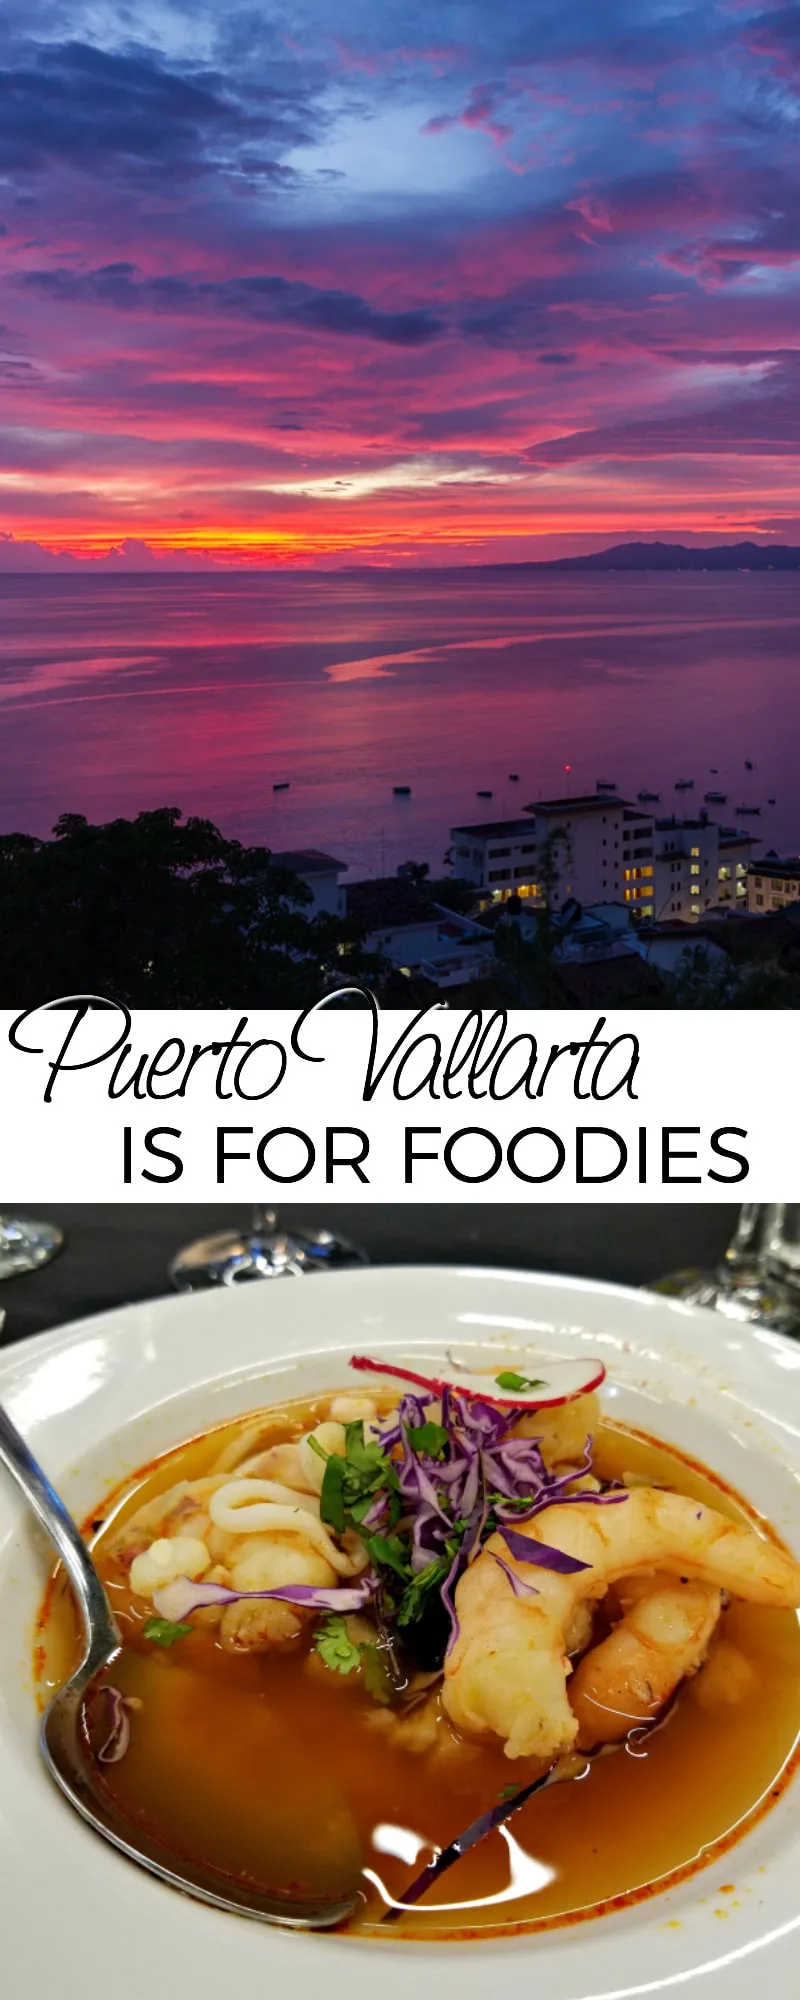 Puerto Vallarta Food Alone is Worth the Trip